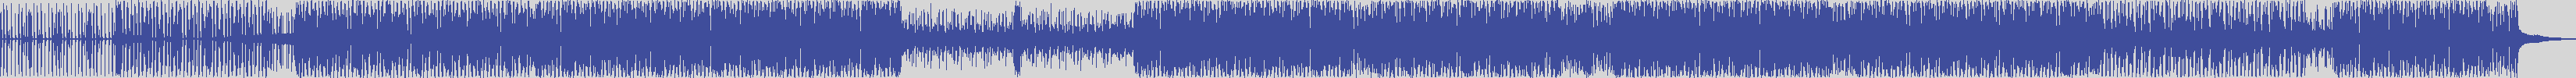 atomic_recordings [AR013] Alex Gazzillo - Red Zone [Original Mix] audio wave form